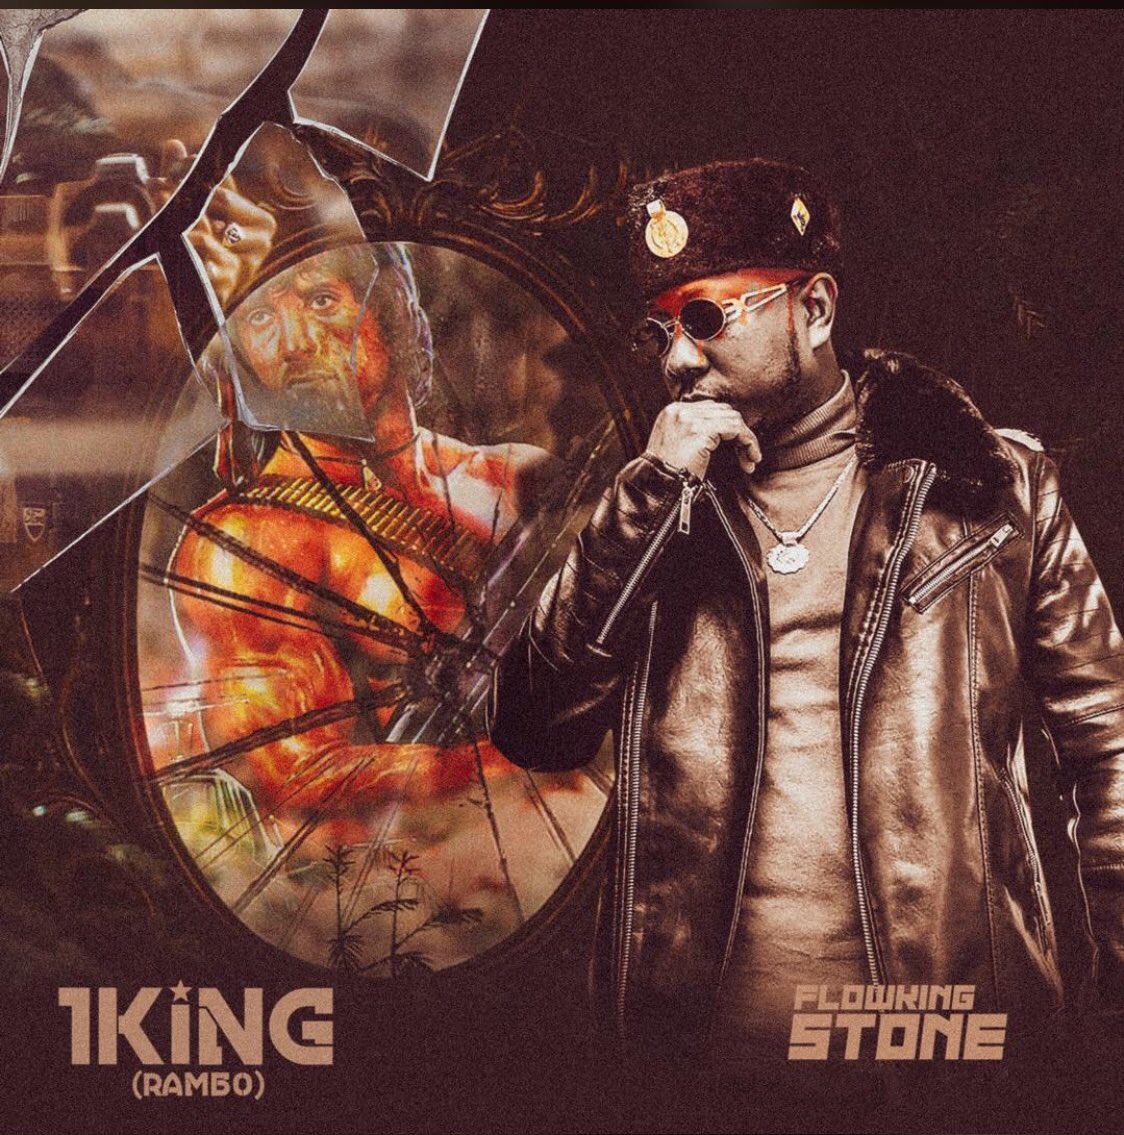 Flowking Stone - 1King (Rambo)